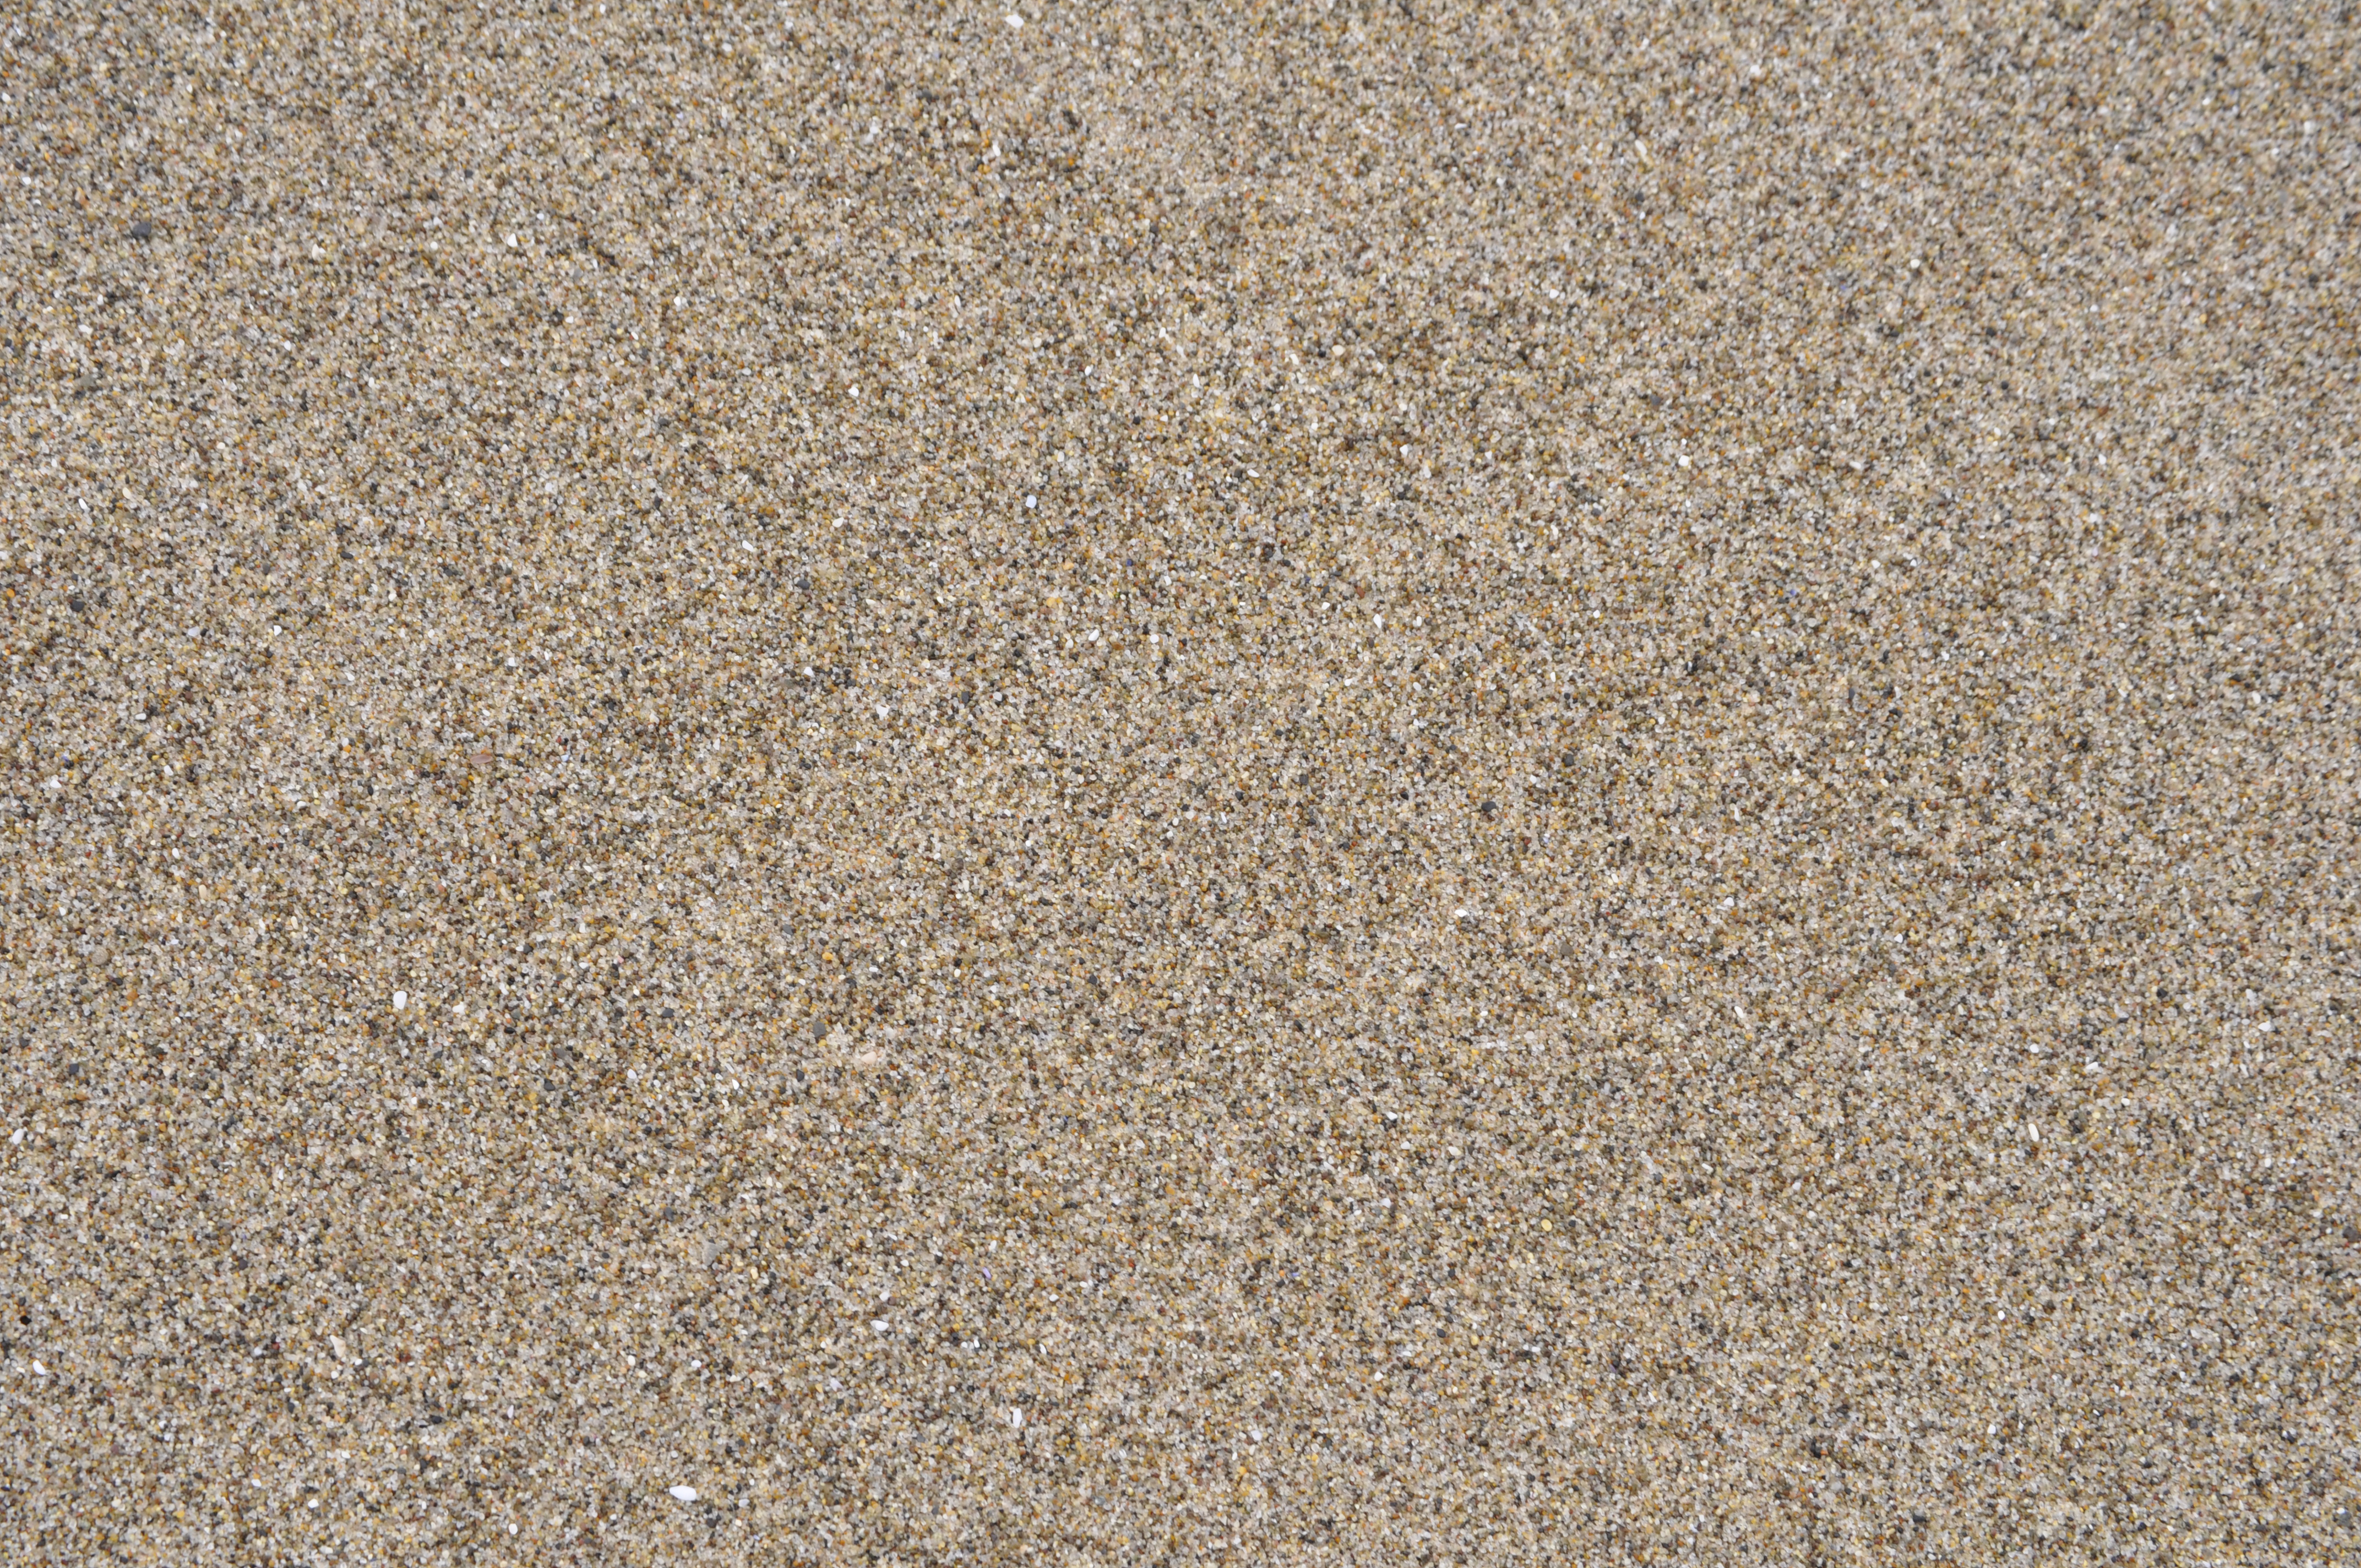 Seamless desert sand texture by hhh316 on DeviantArt